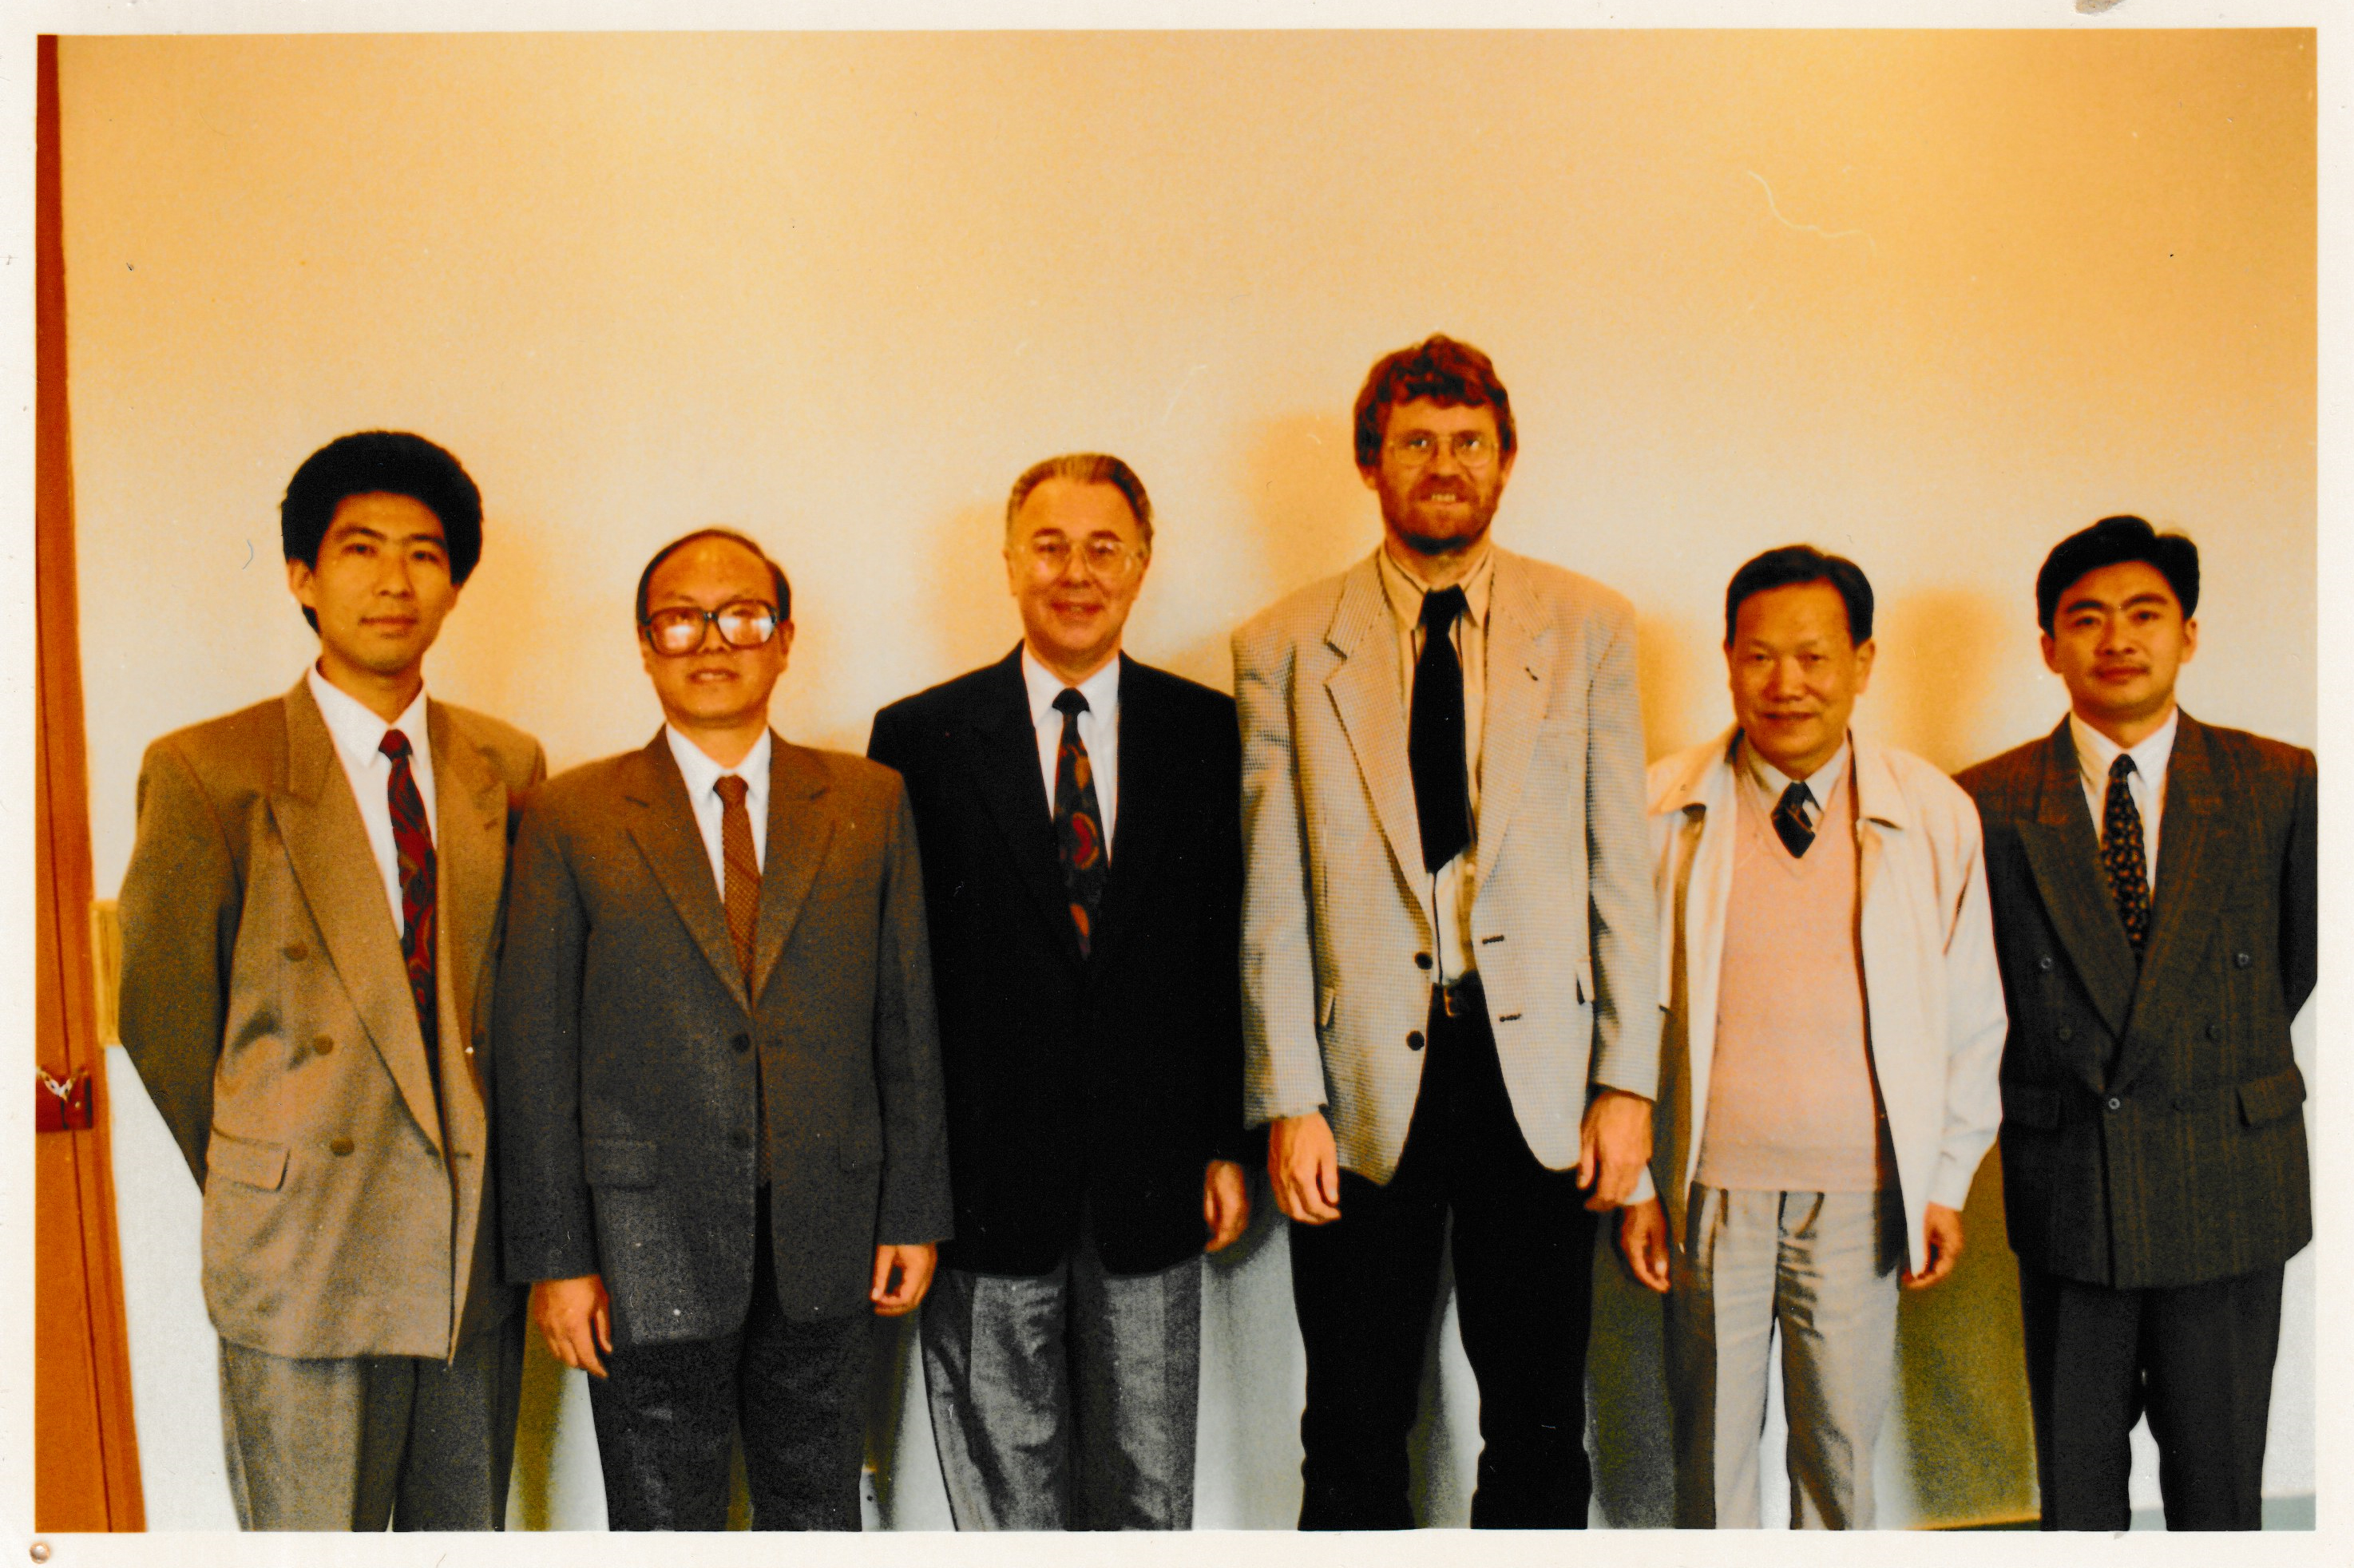 Ontmoeting met de leiders van het College of Land Management (onderdeel van Nanjing Agricultural University), oktober 1995.